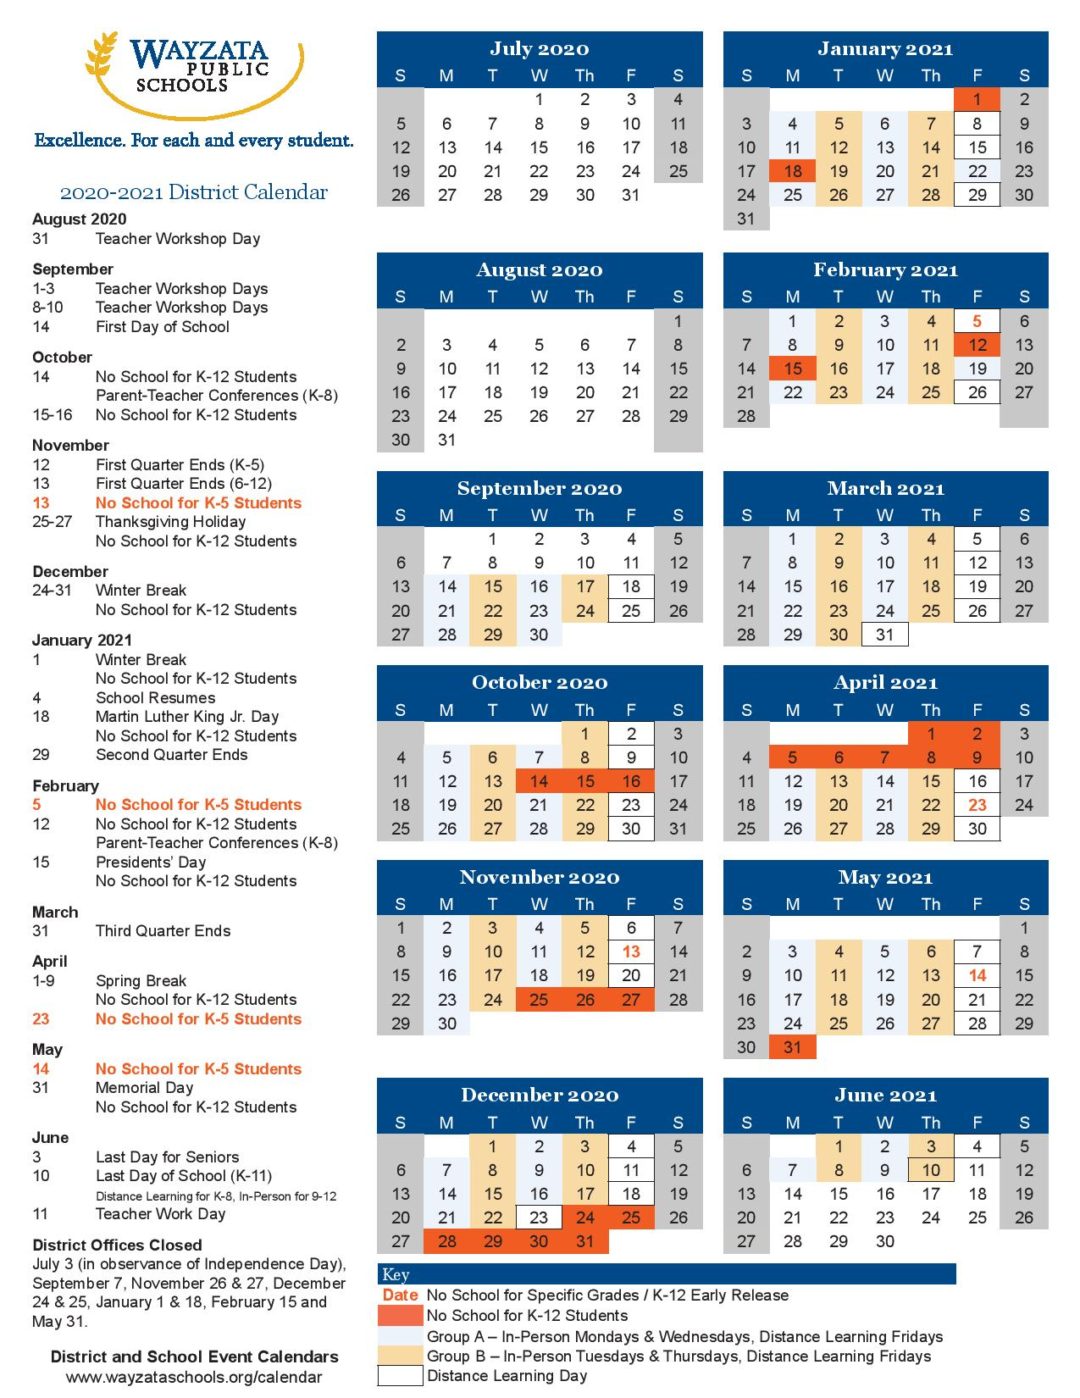 Wayzata Public Schools Calendar 2020 2021 in PDF